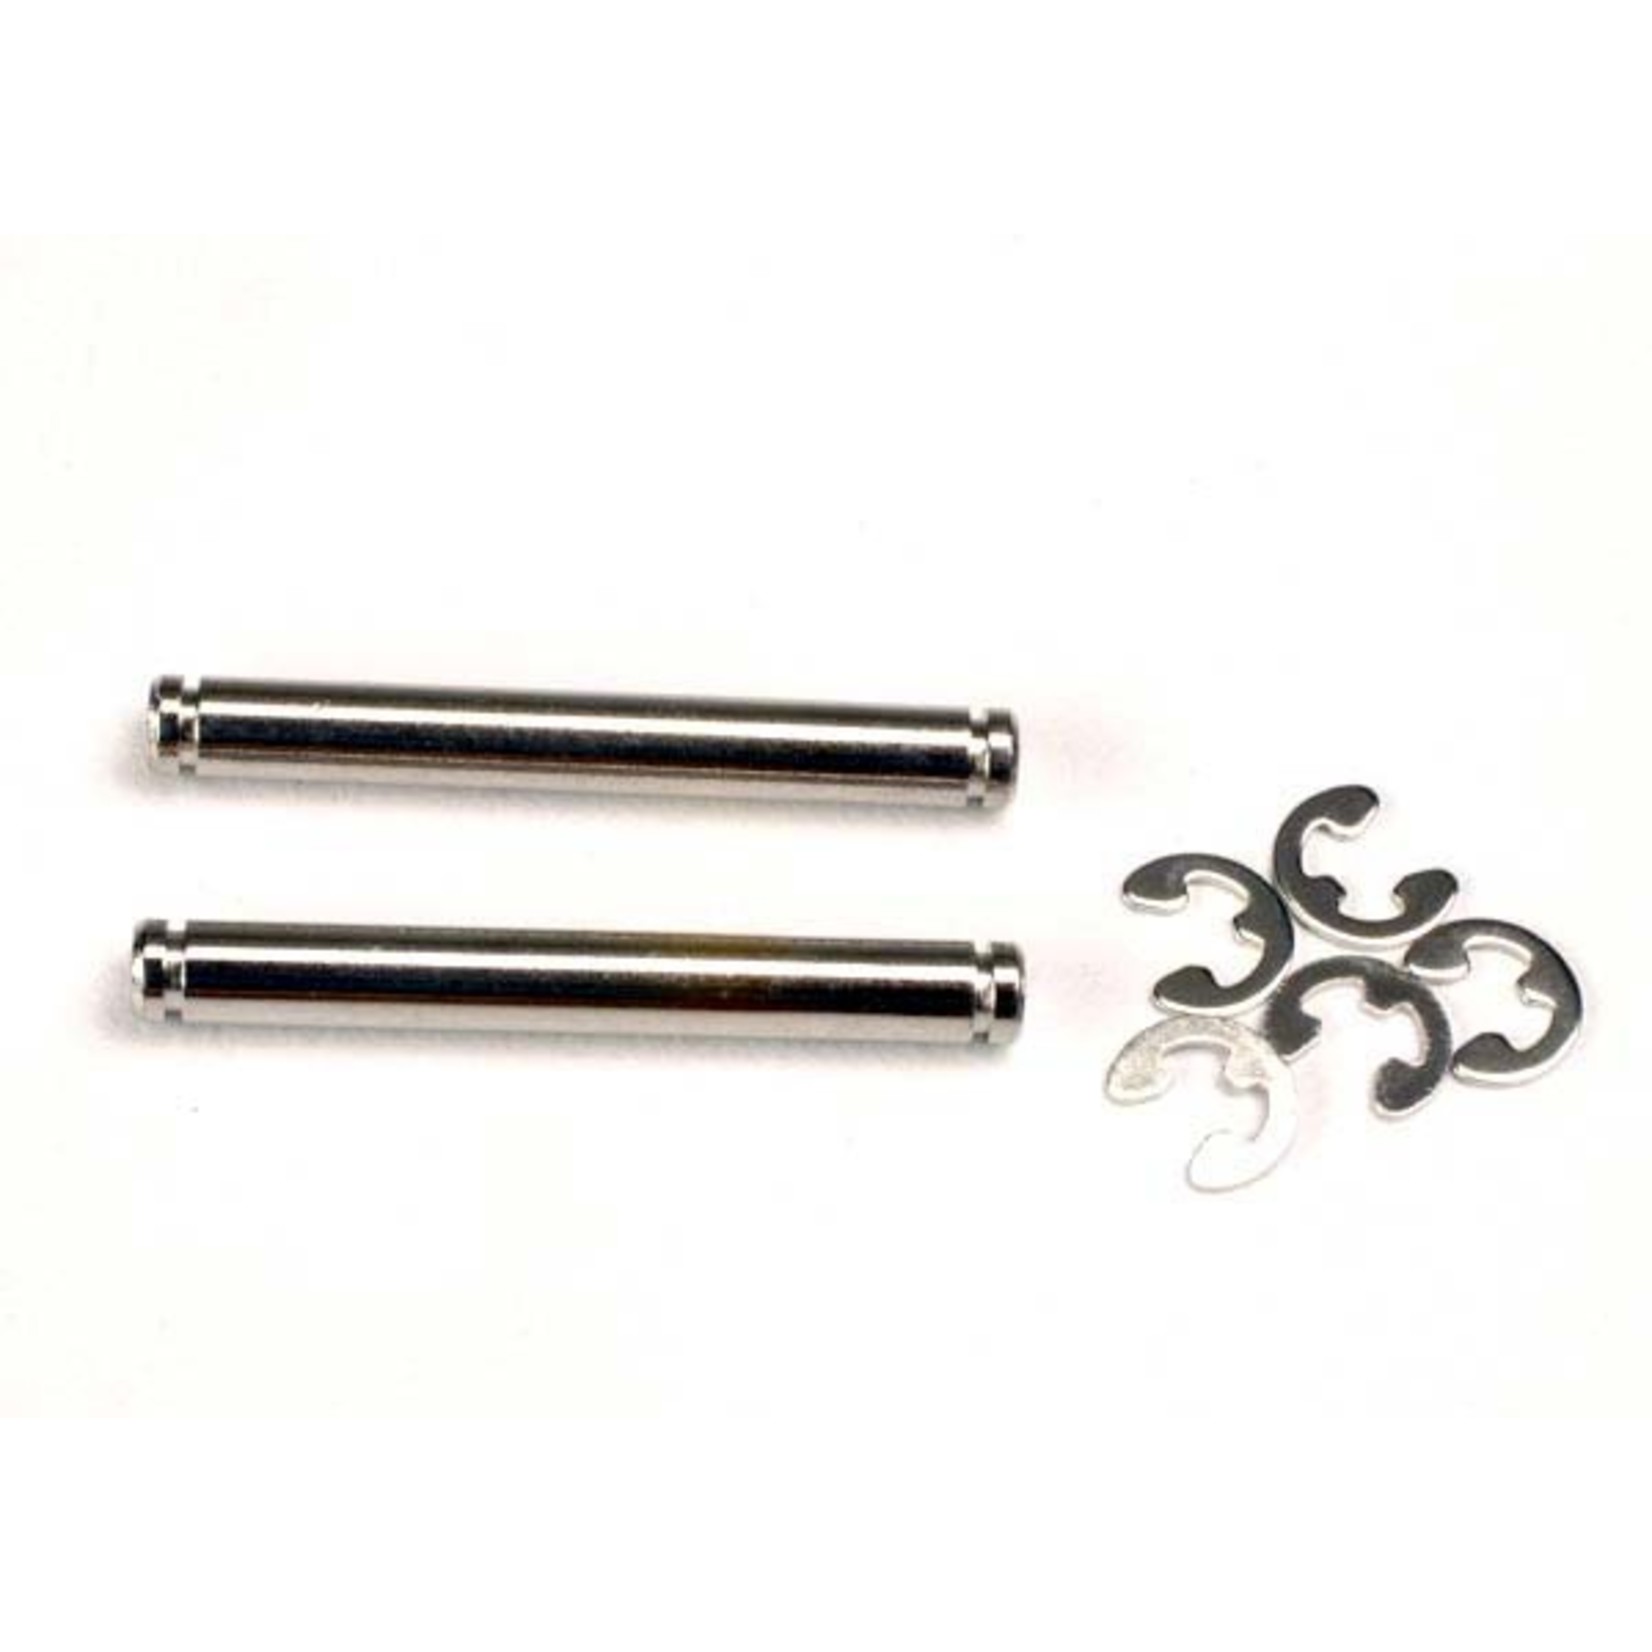 Traxxas 2636 - Suspension pins, 26mm kingpins) (2)w/ E-cli